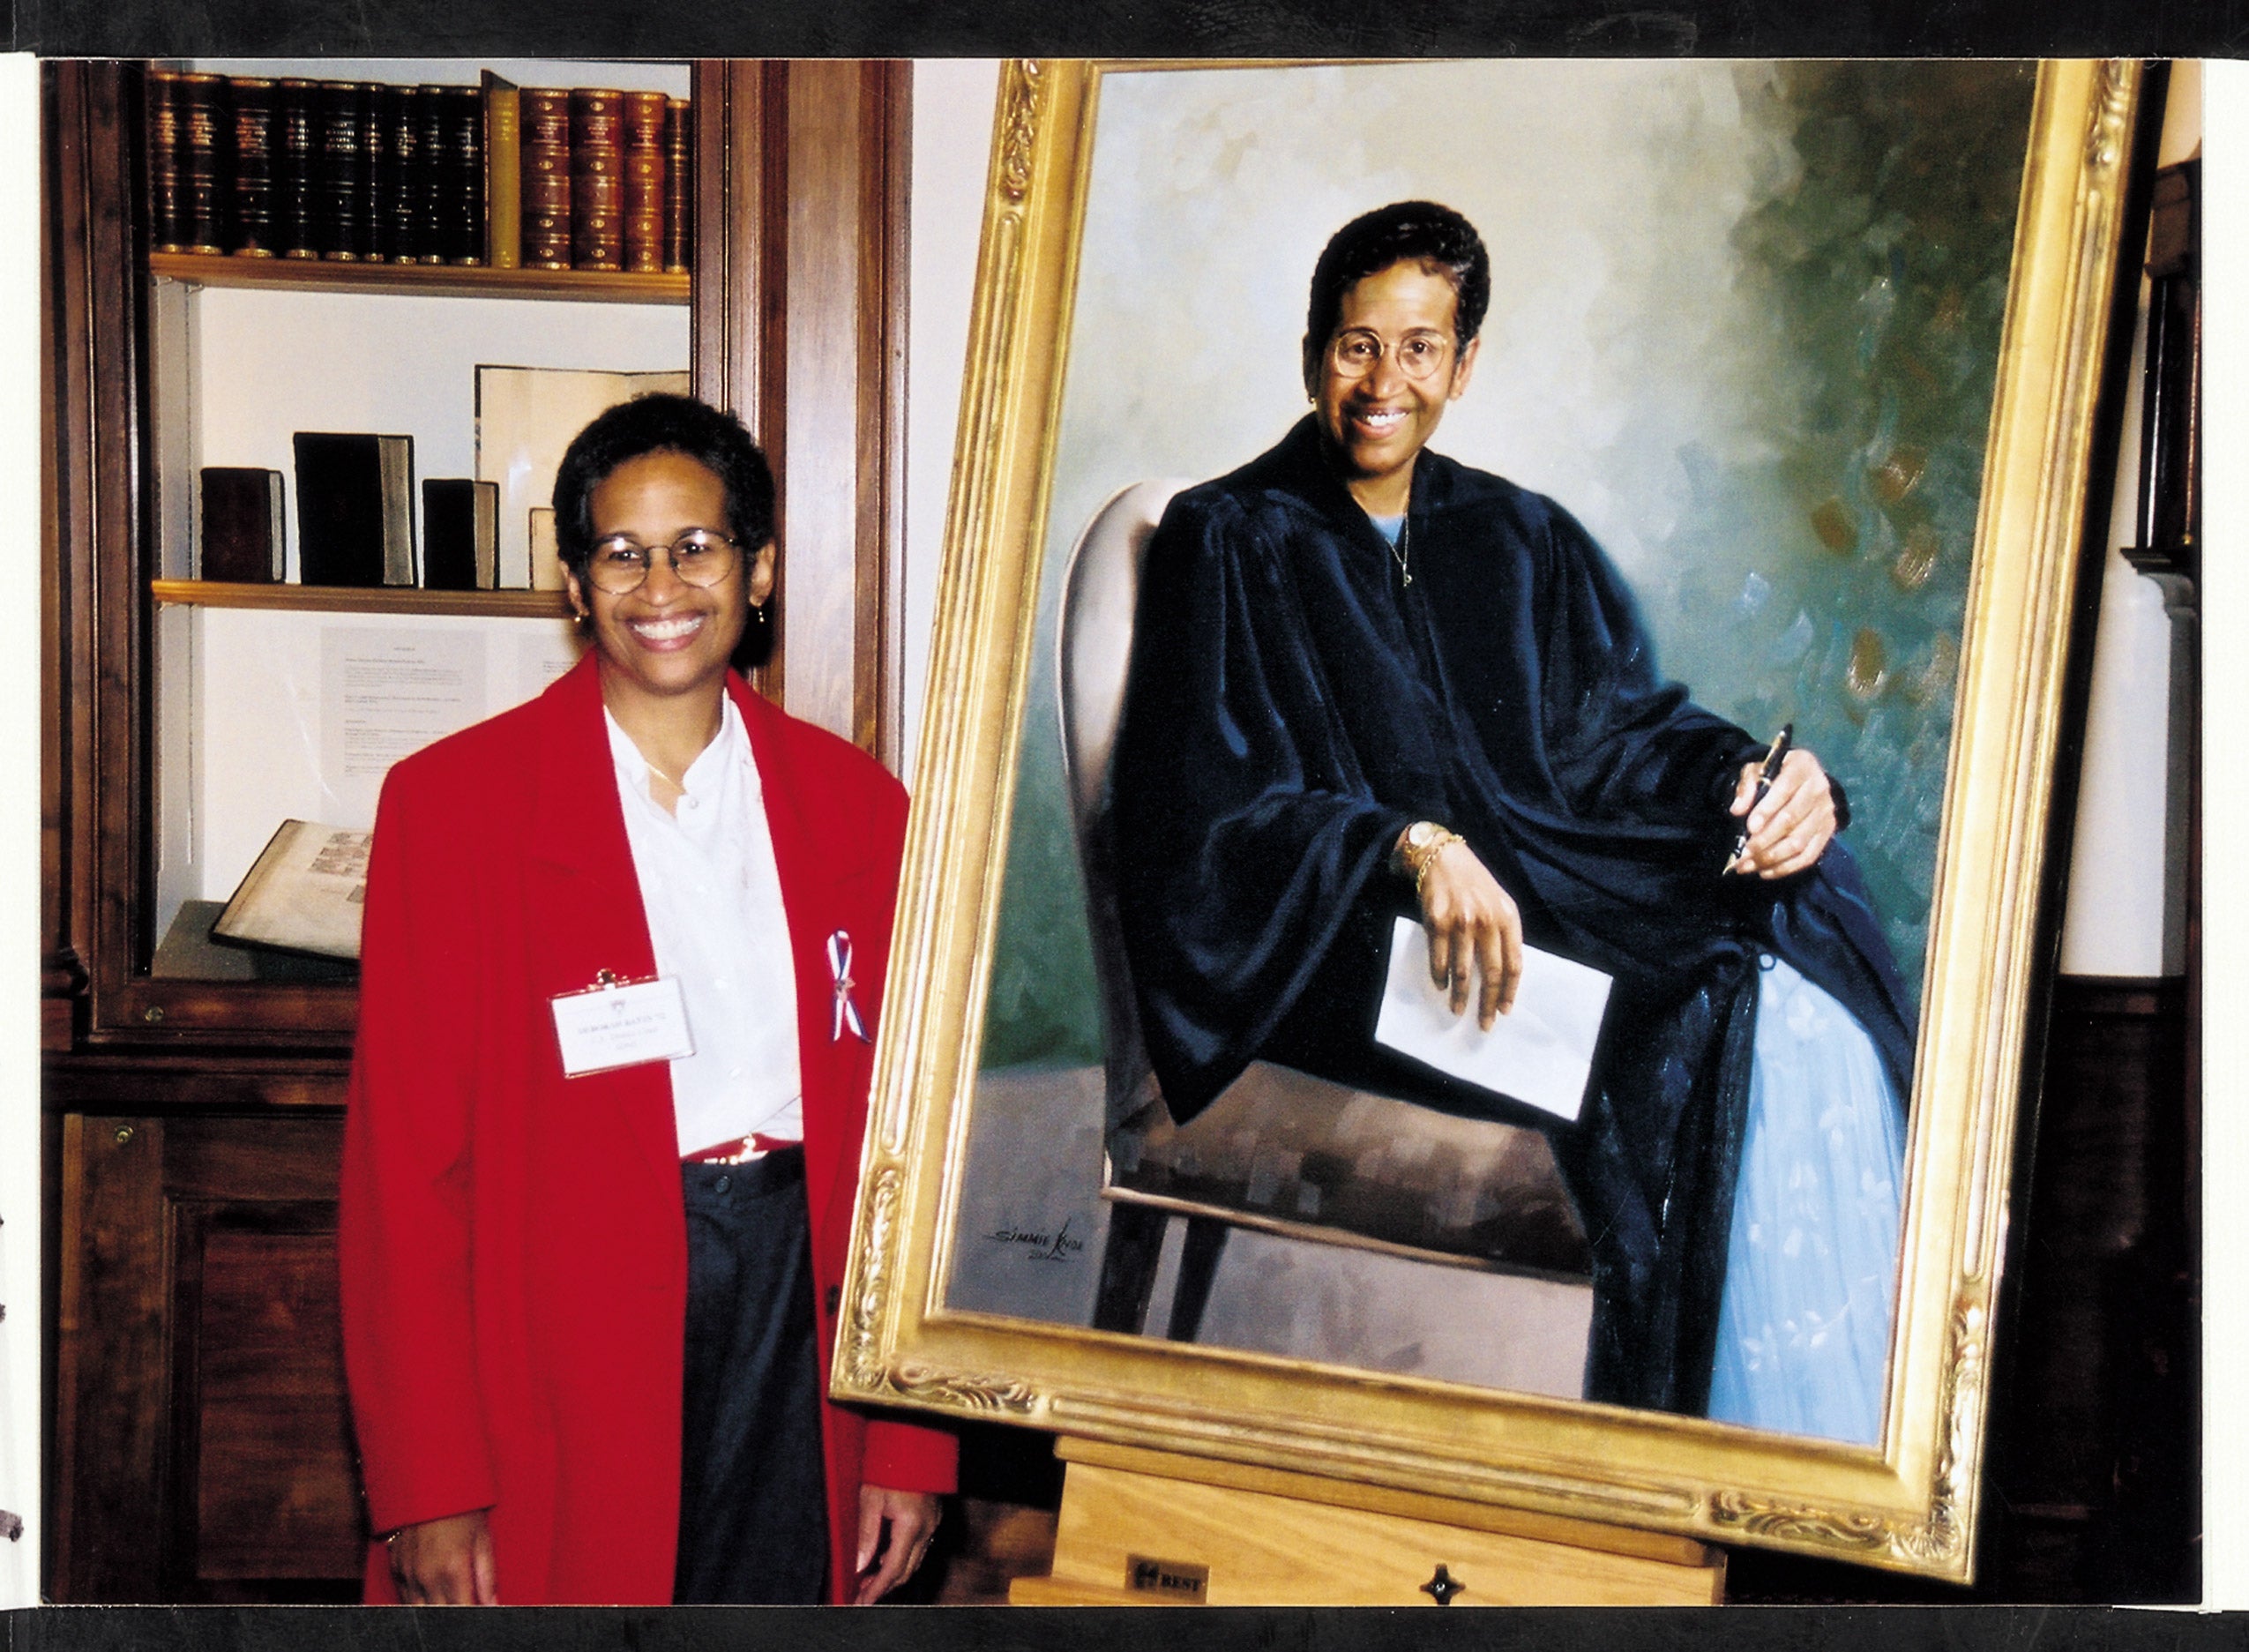 Judge Deborah Batts with portrait